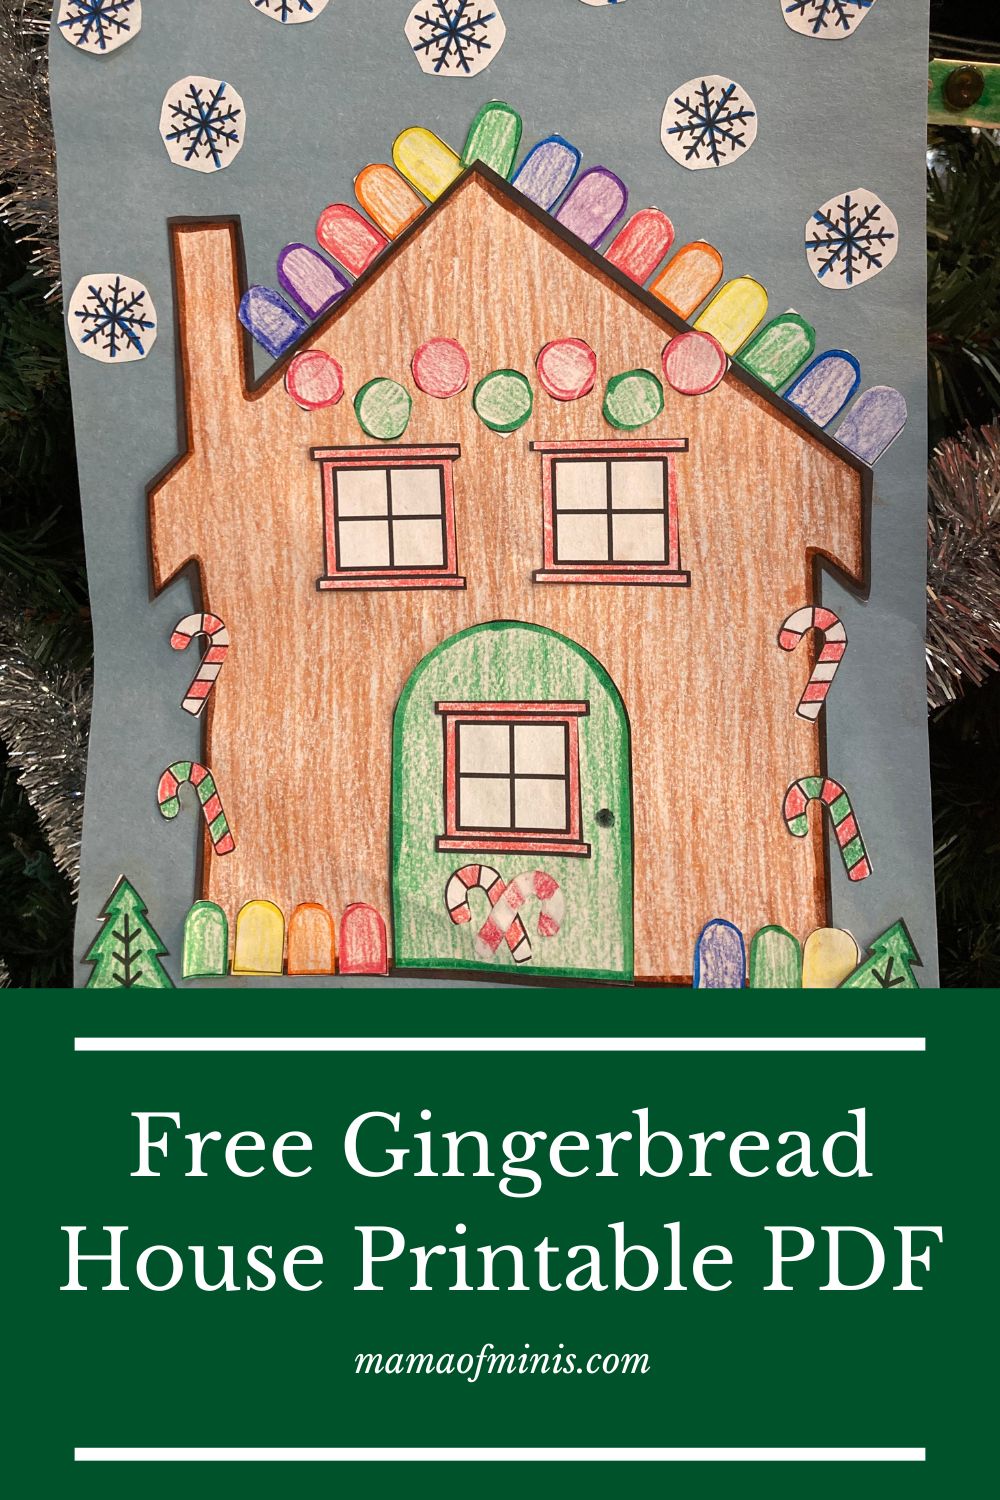 Free Gingerbread House Printable PDF